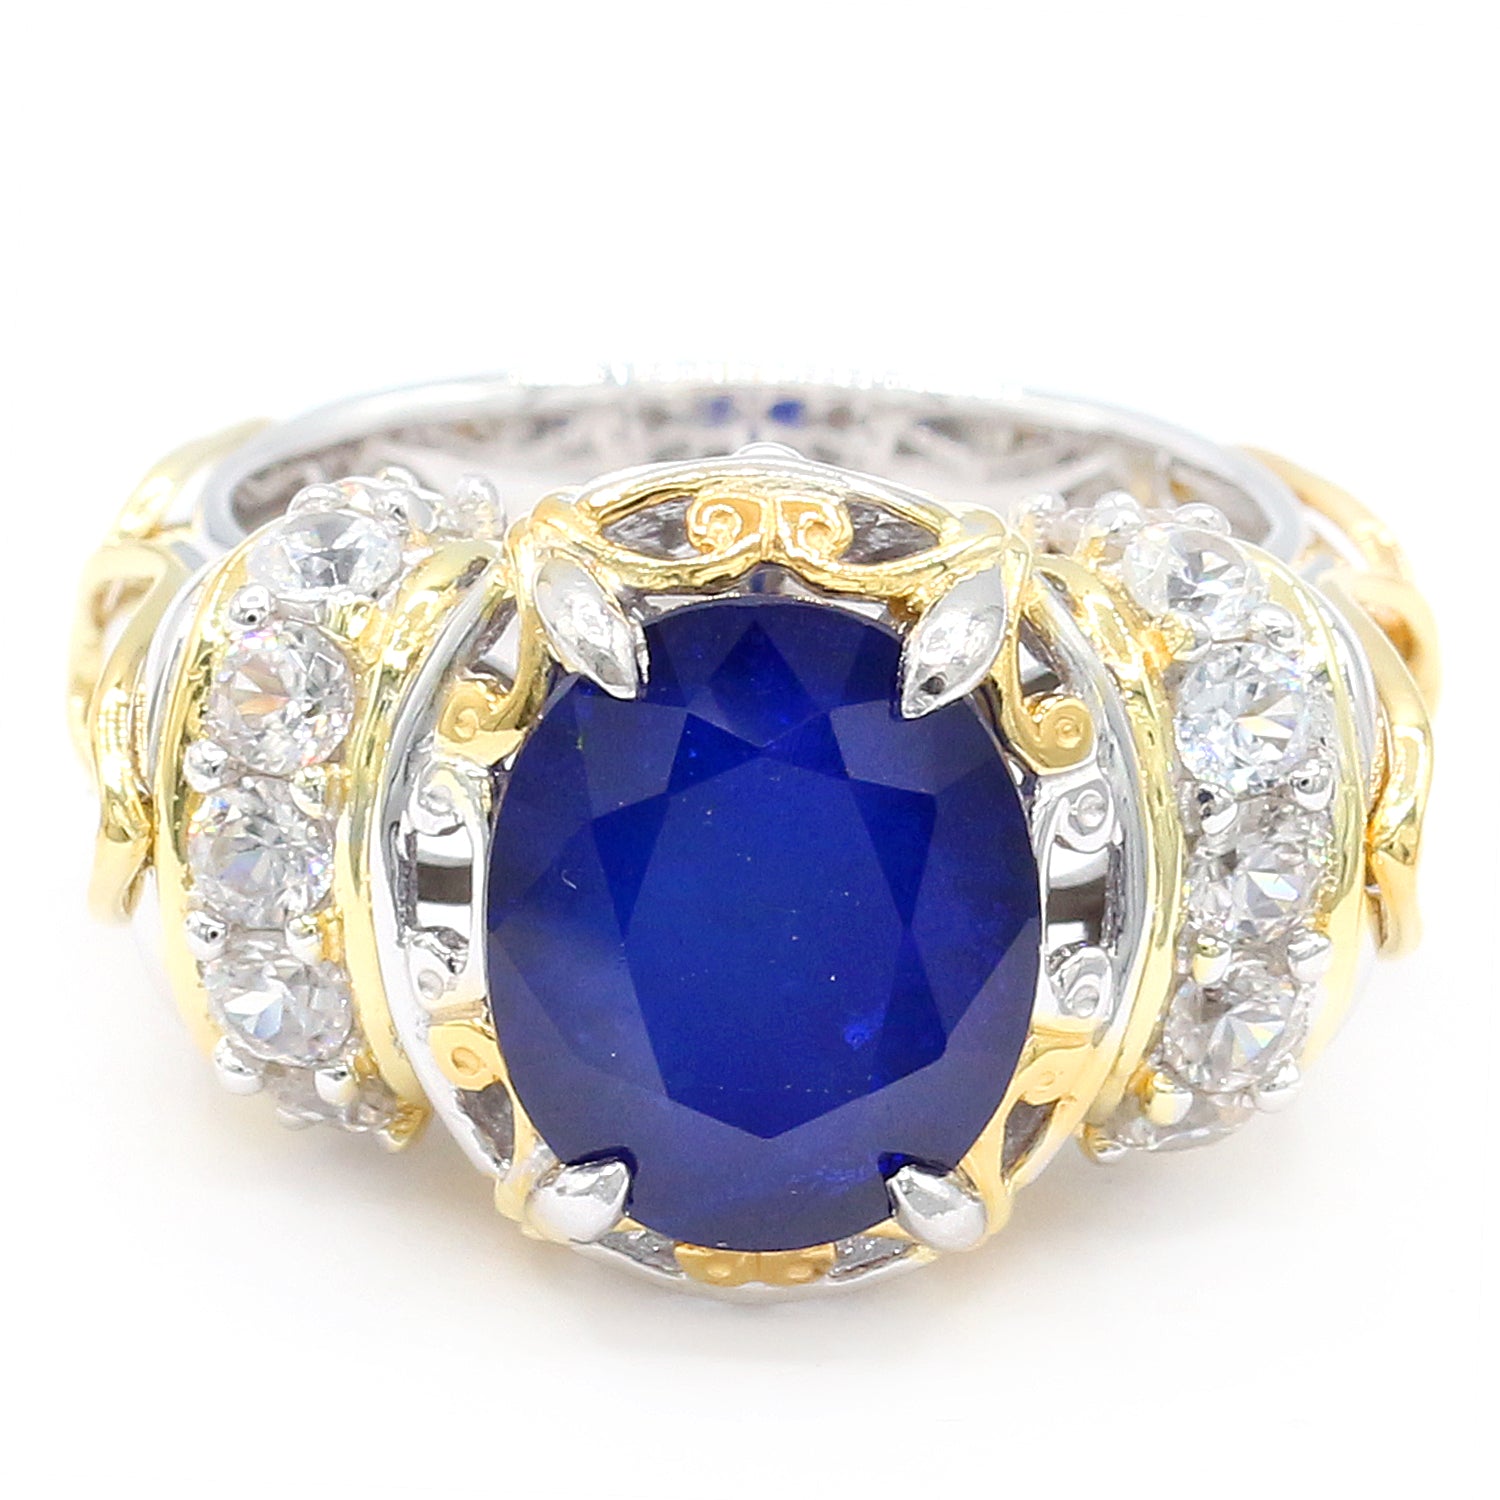 Limited Edition Gems en Vogue 6.10ctw Cobalt Blue Spinel & White Zircon Ring